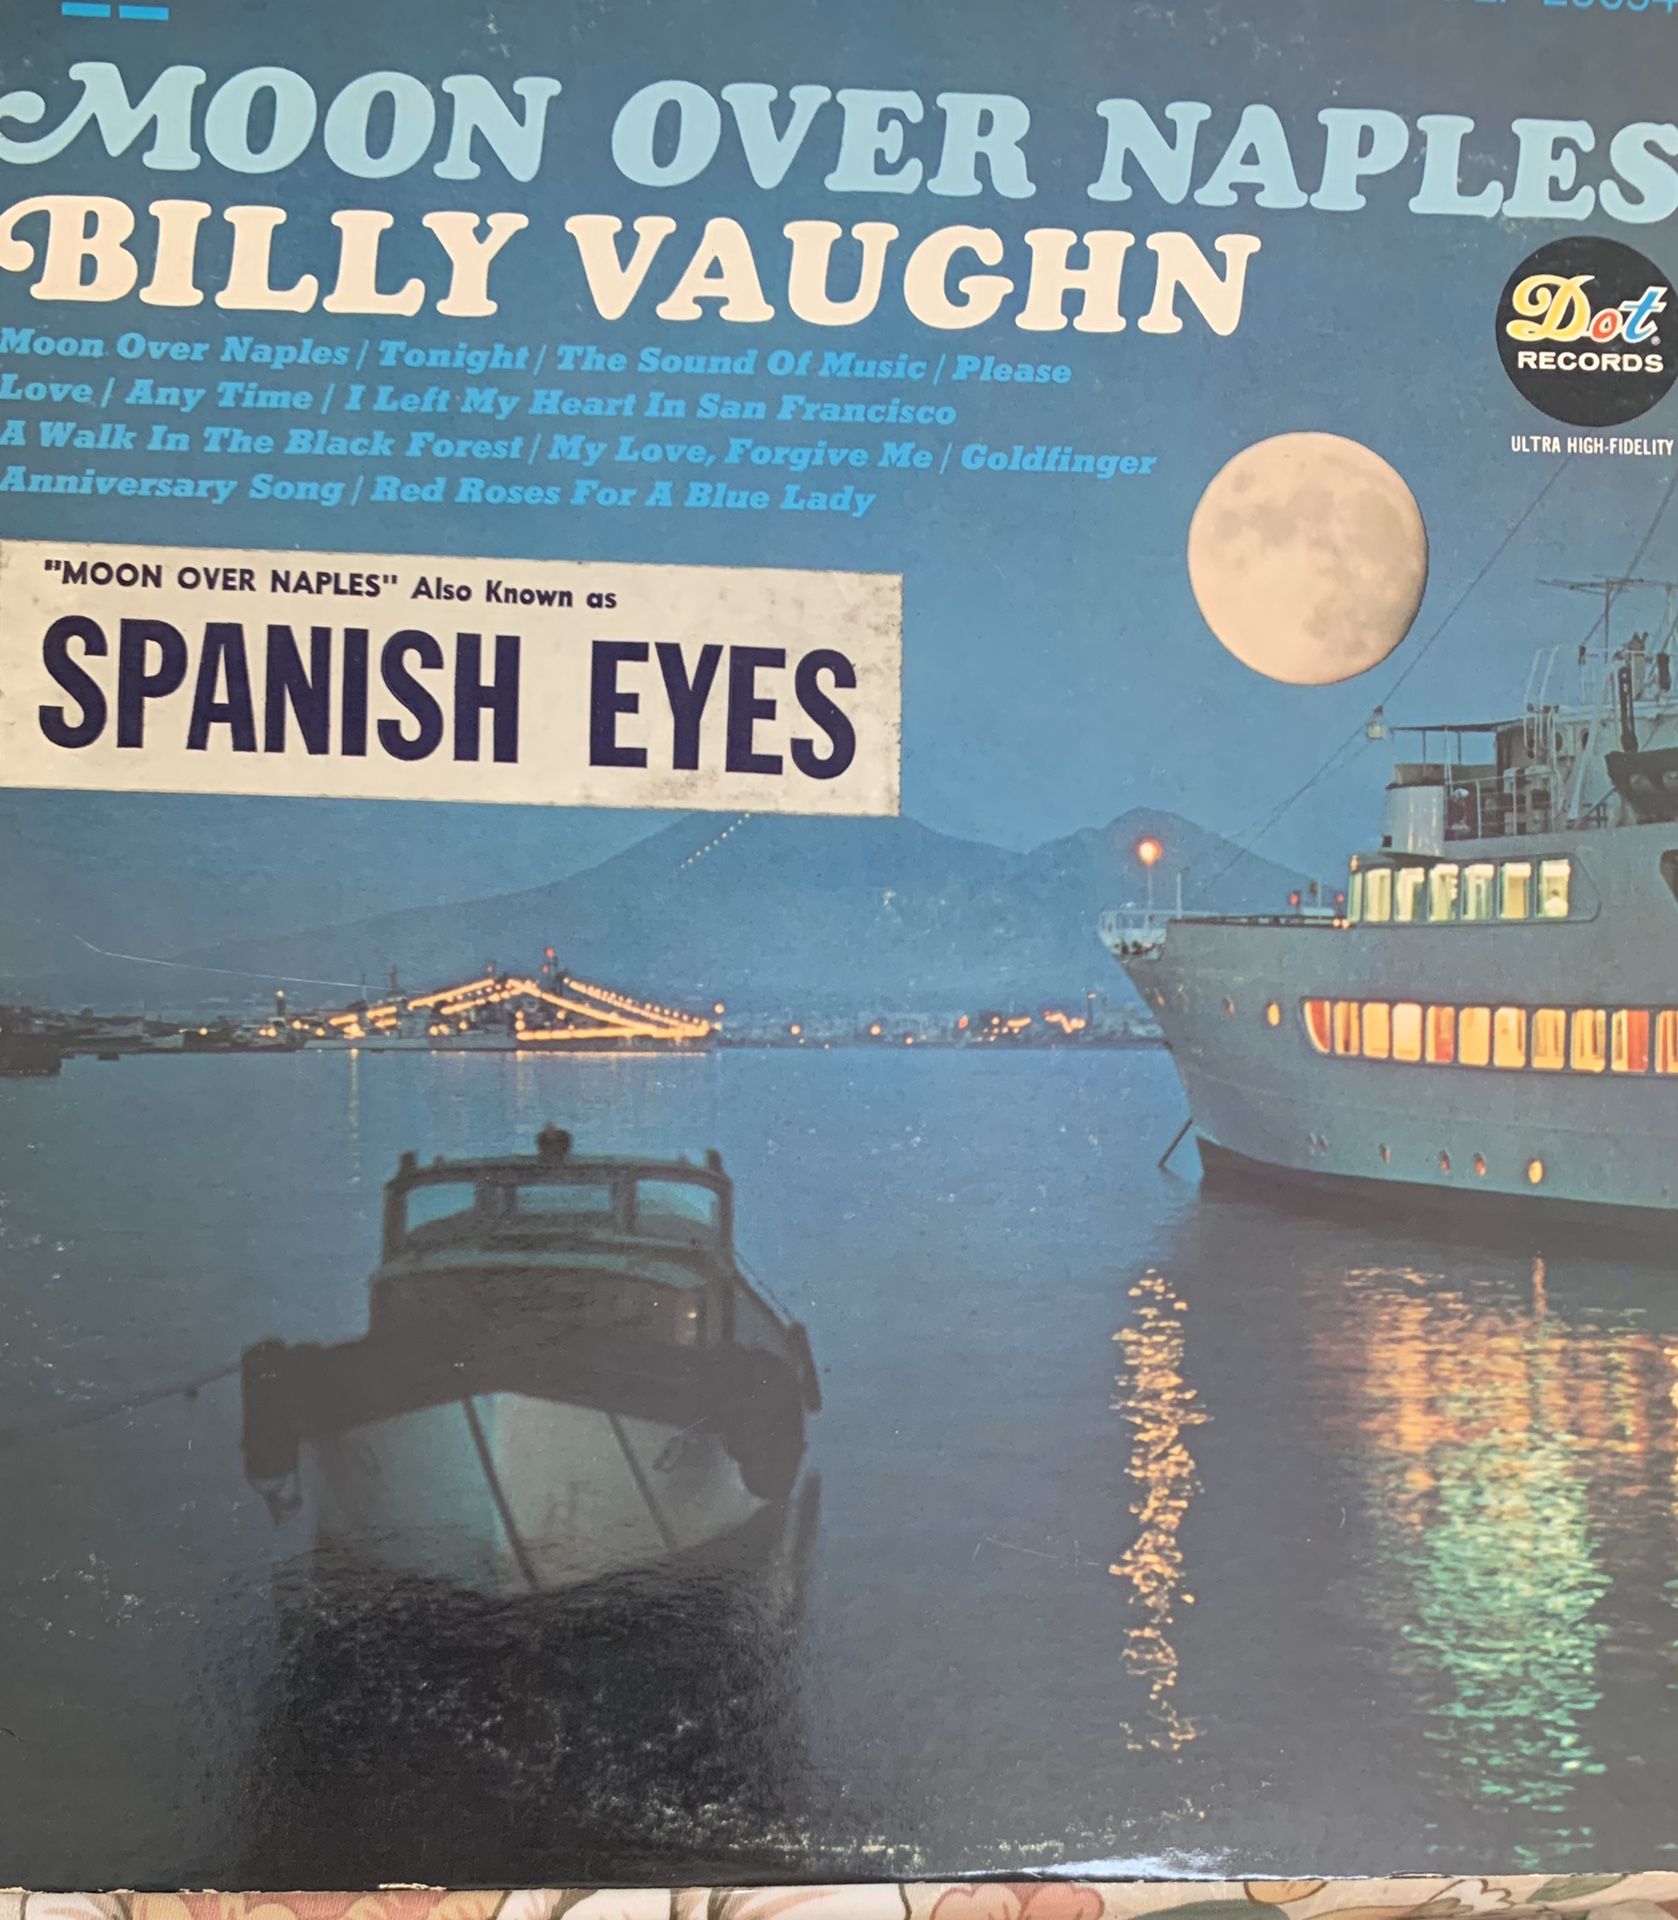 Moon Over Naples by Billy Vaughn “Spanish Eyes” vinyl